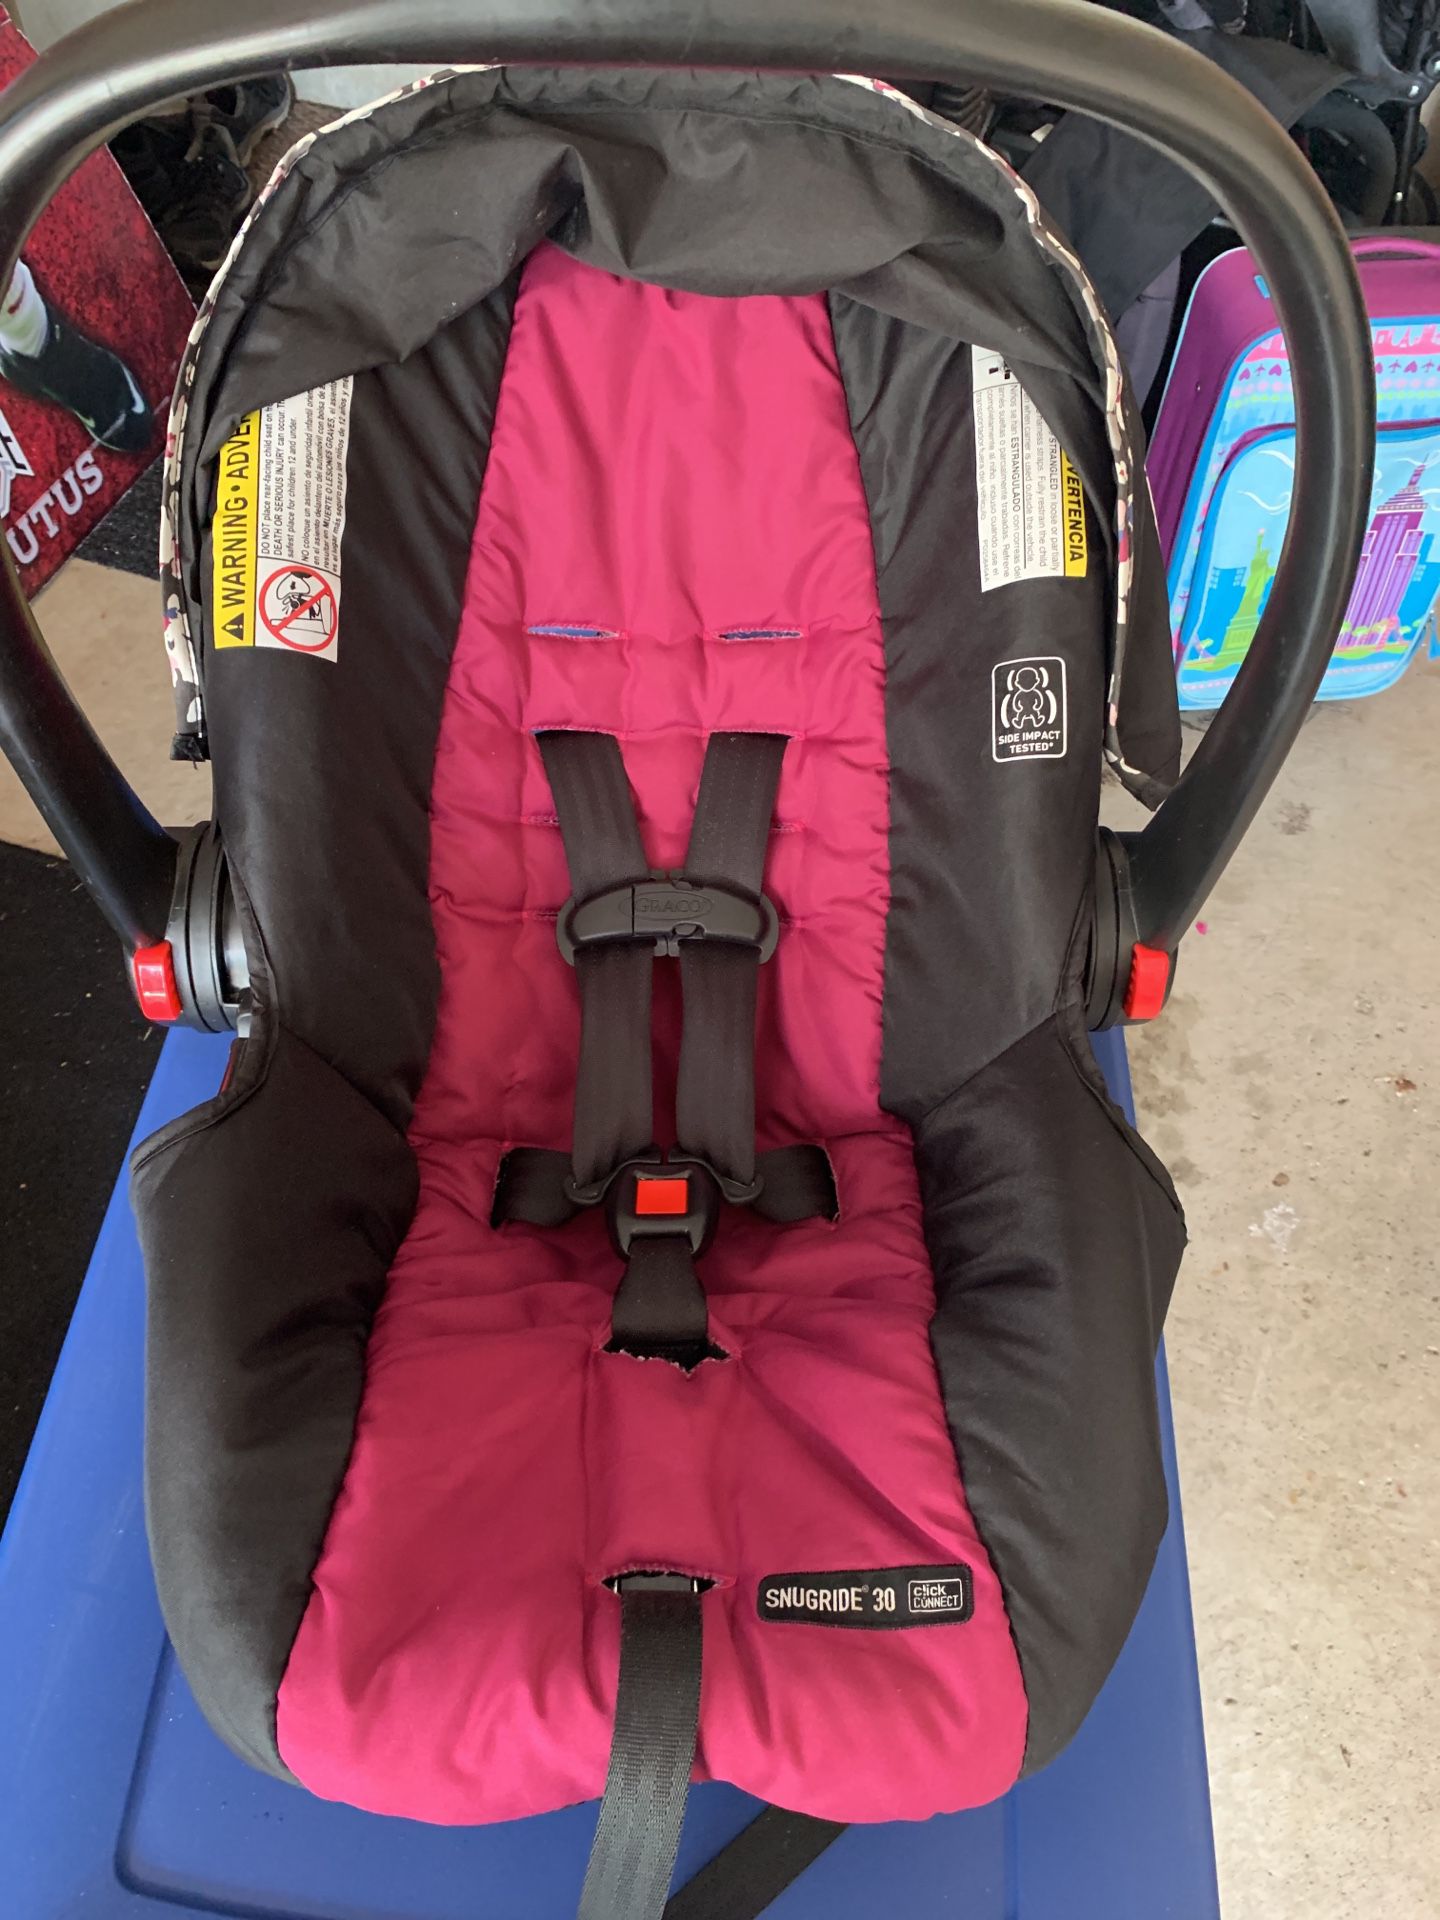 Graco car seat/stroller